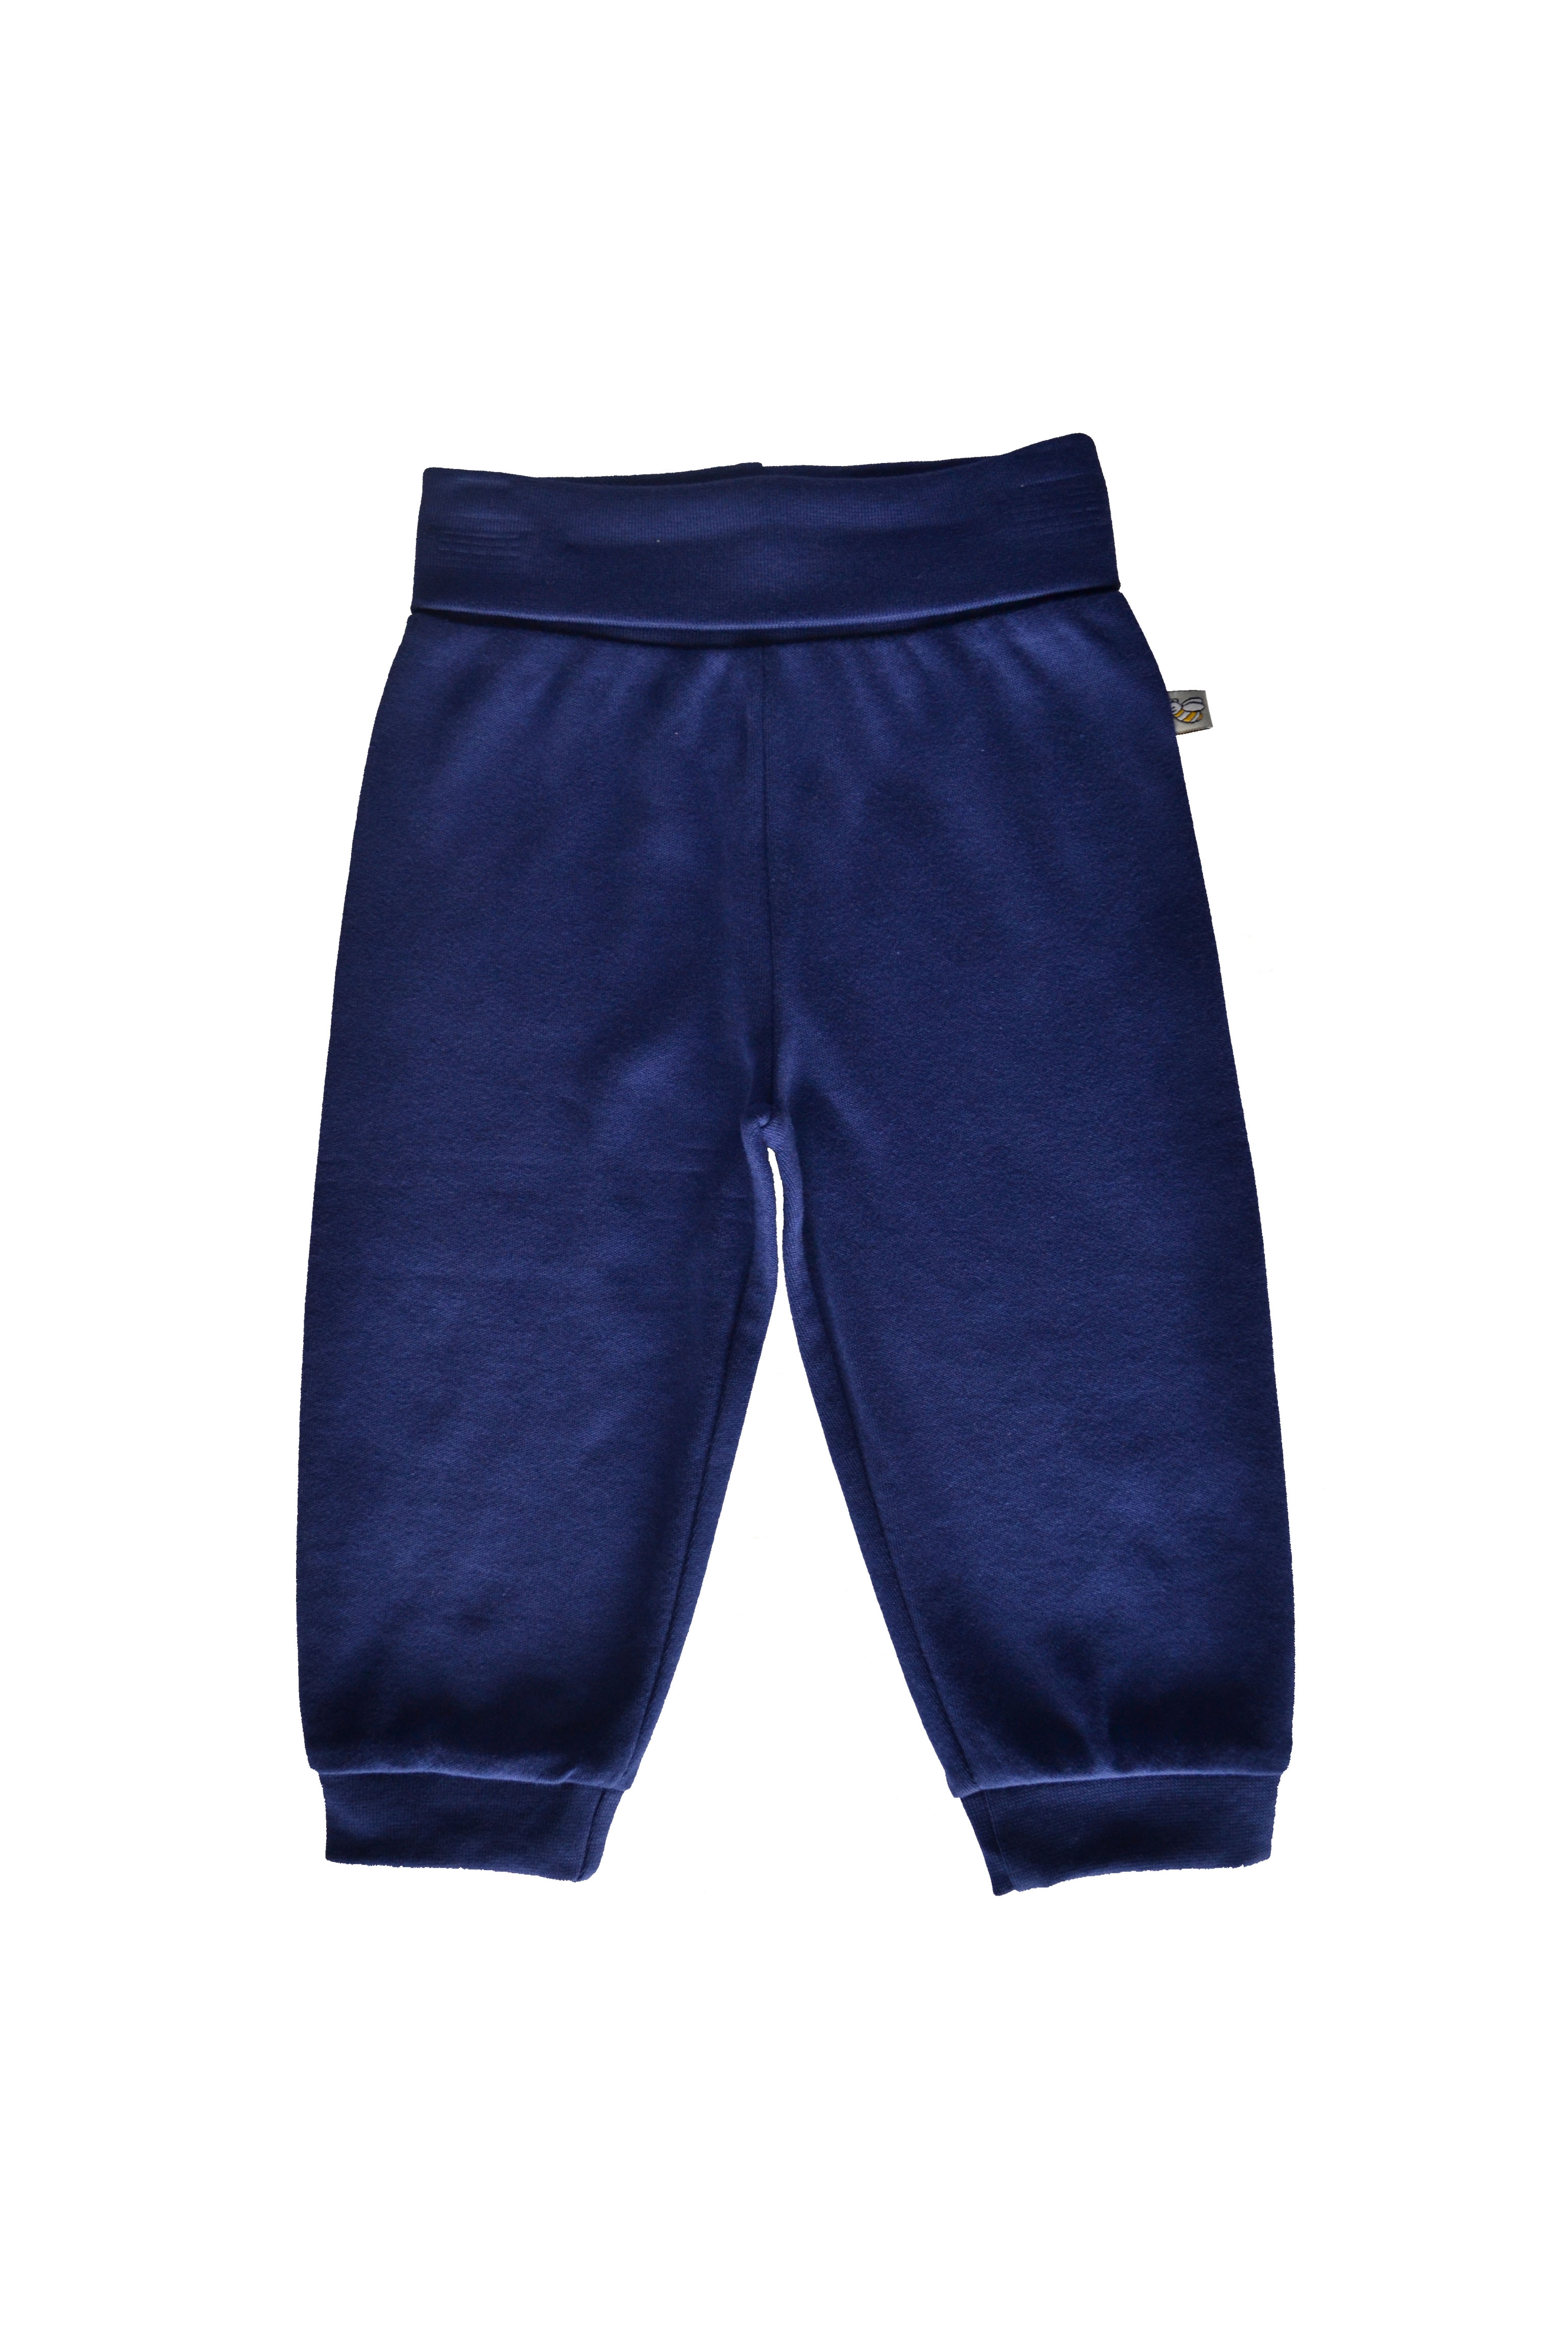 Navy Pant with folded waistband (100% Cotton Interlock Biowash)